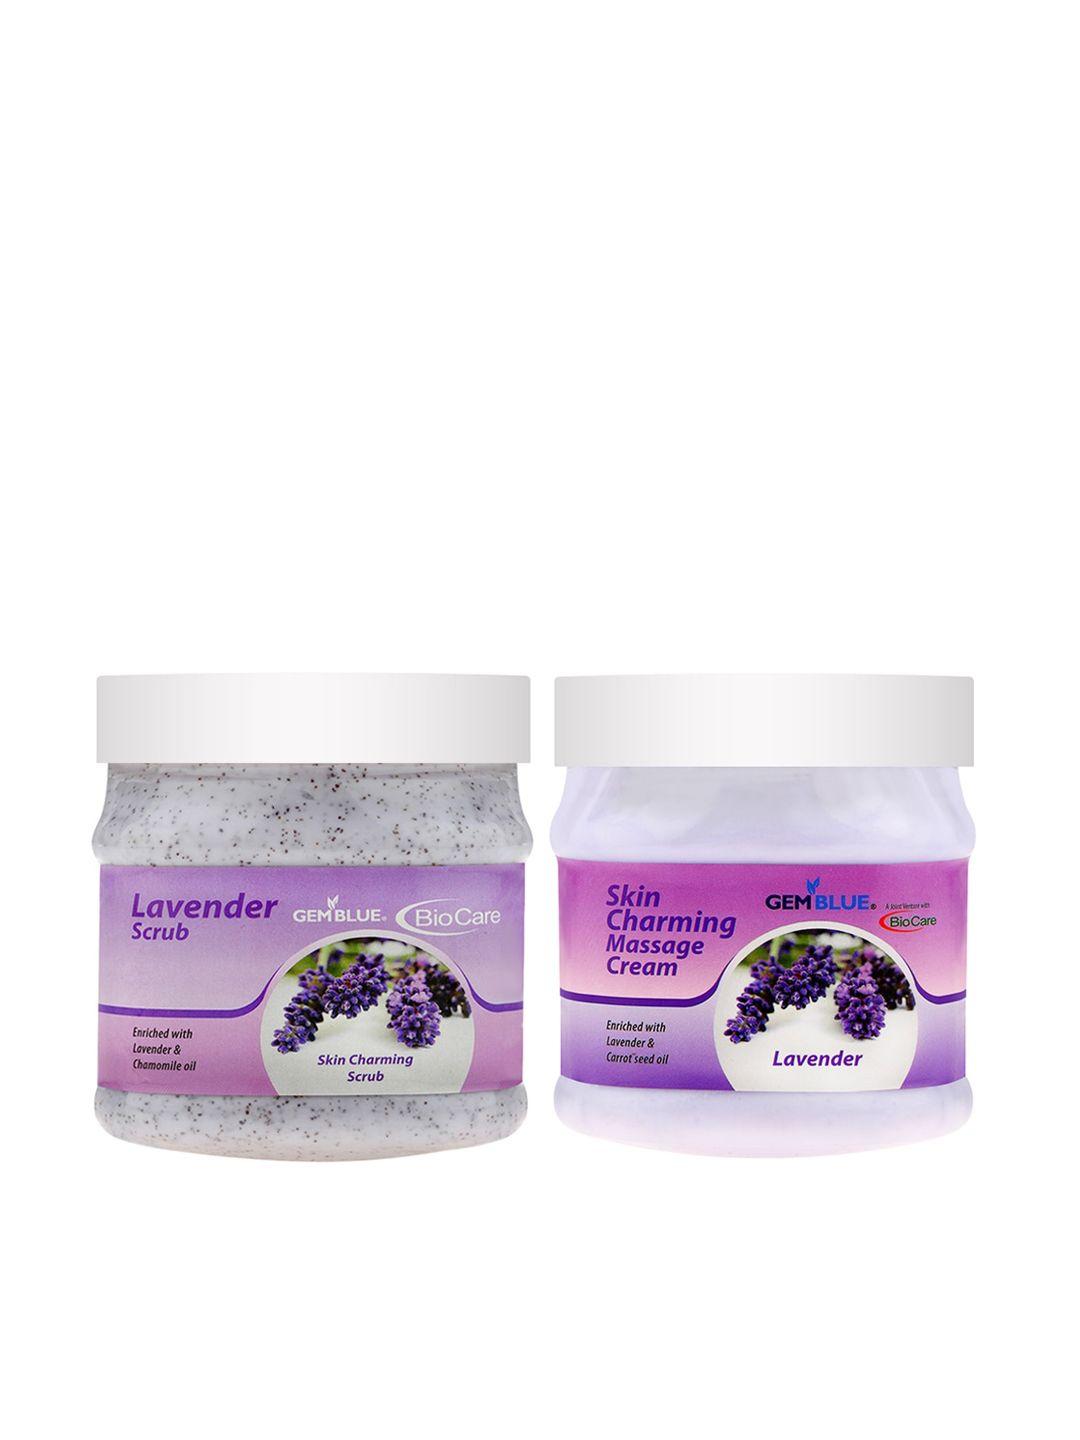 gemblue biocare unisex set of 2 lavender scrub & cream